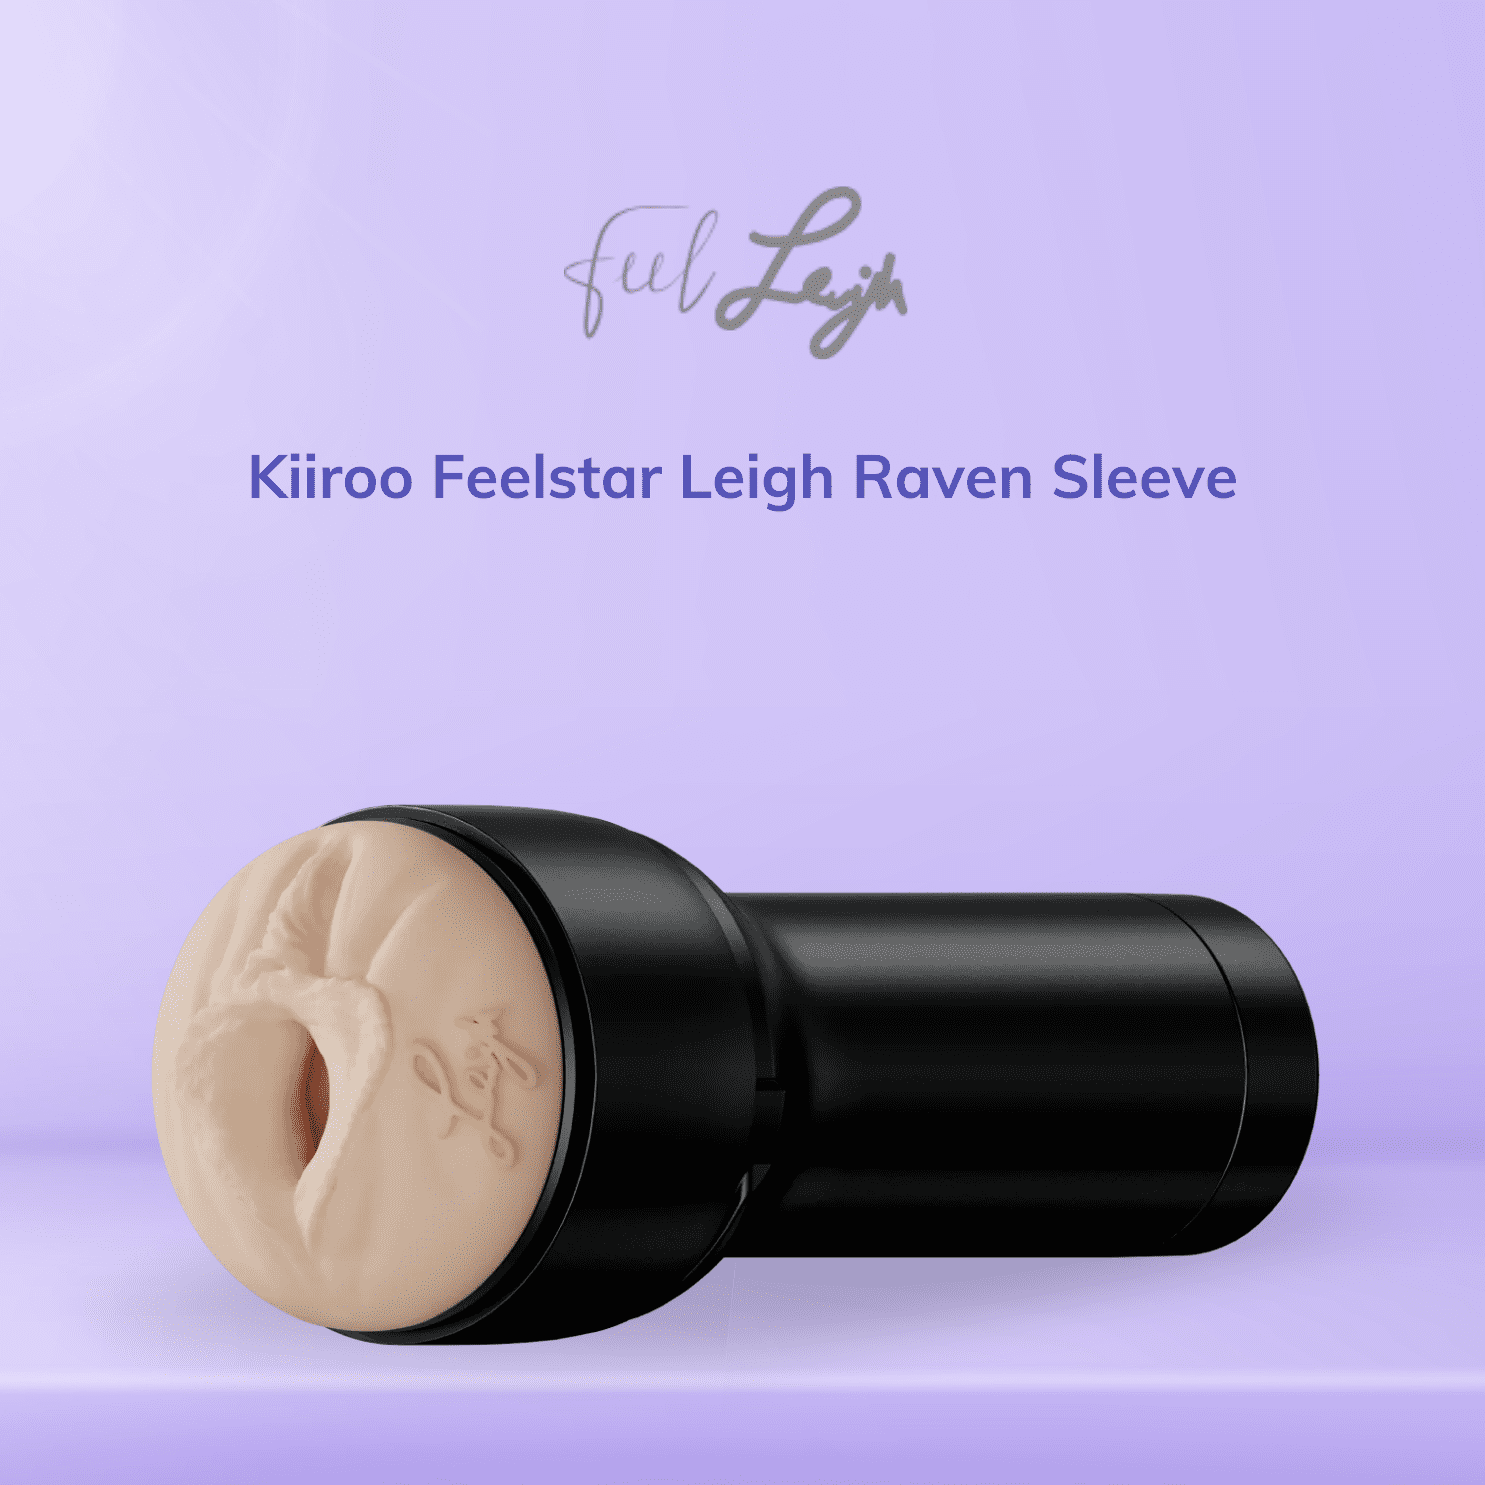 Kiiroo Feelstar Leigh Raven Sleeve - Intimate Pleasure